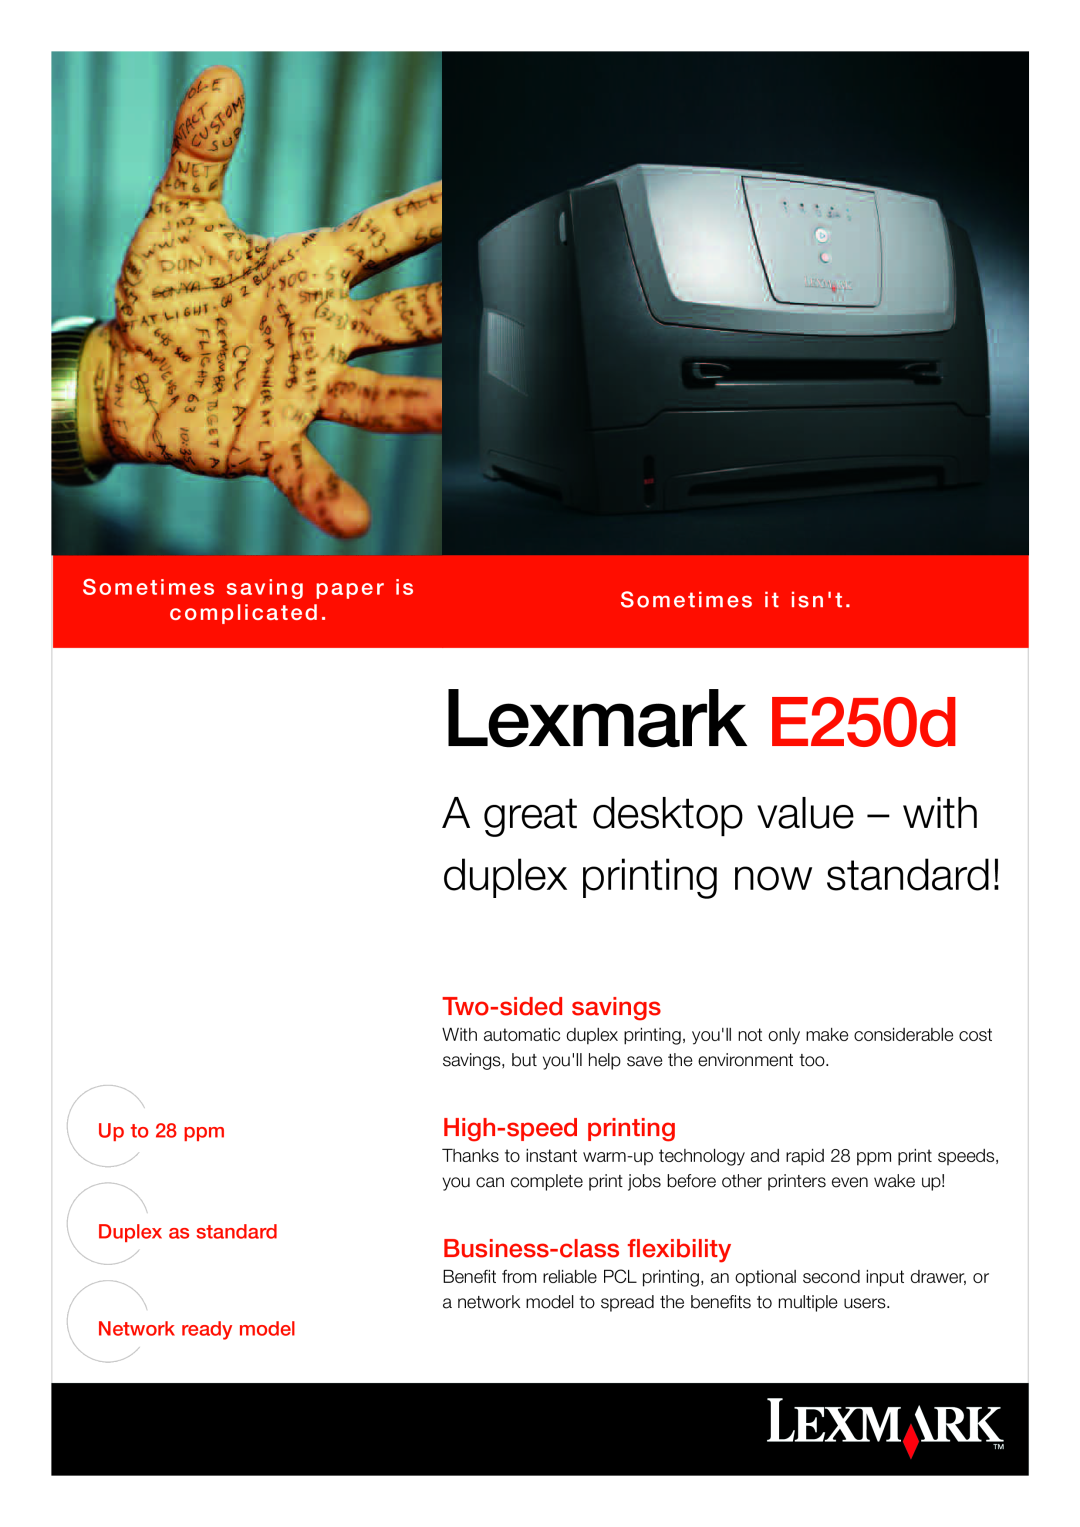 Lexmark manual Lexmark E250d, Two-sidedsavings, High-speedprinting, Business-classflexibility, complicated 